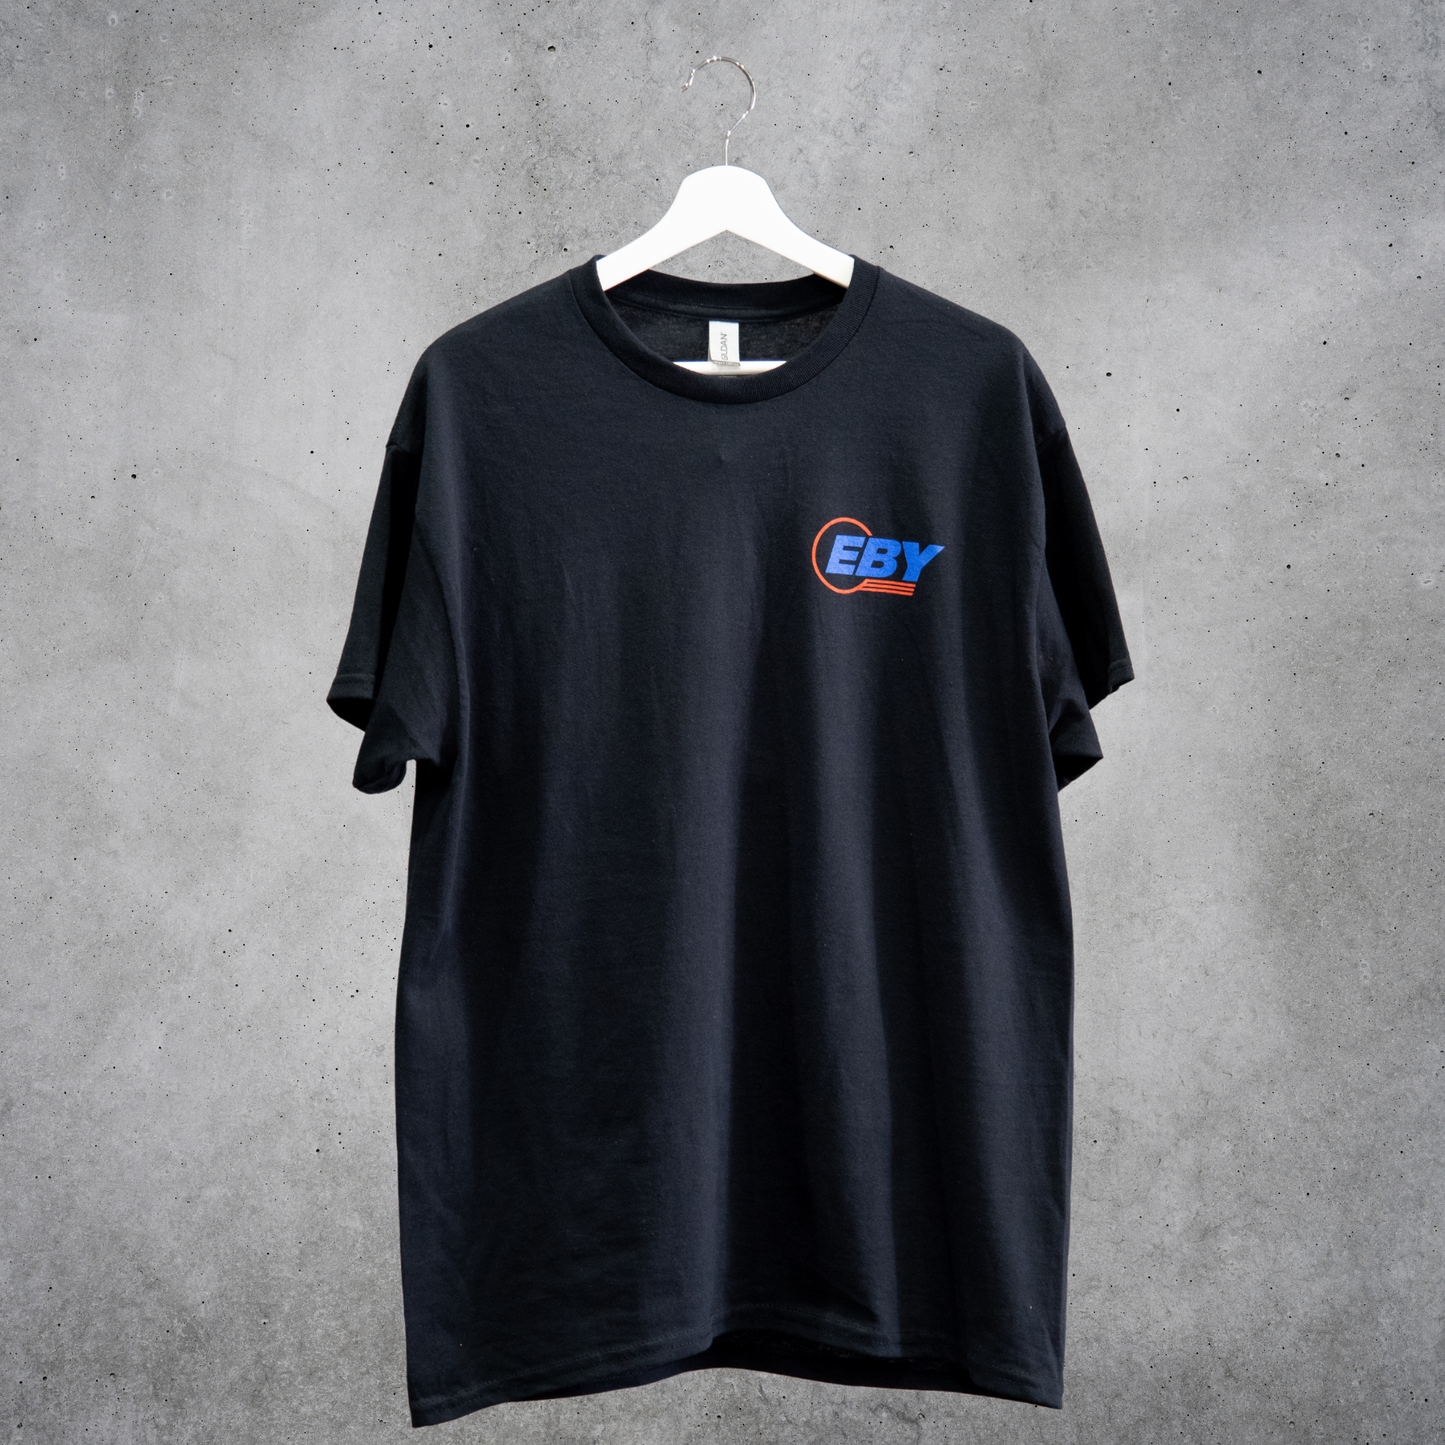 Eby Generation T-Shirt - Black